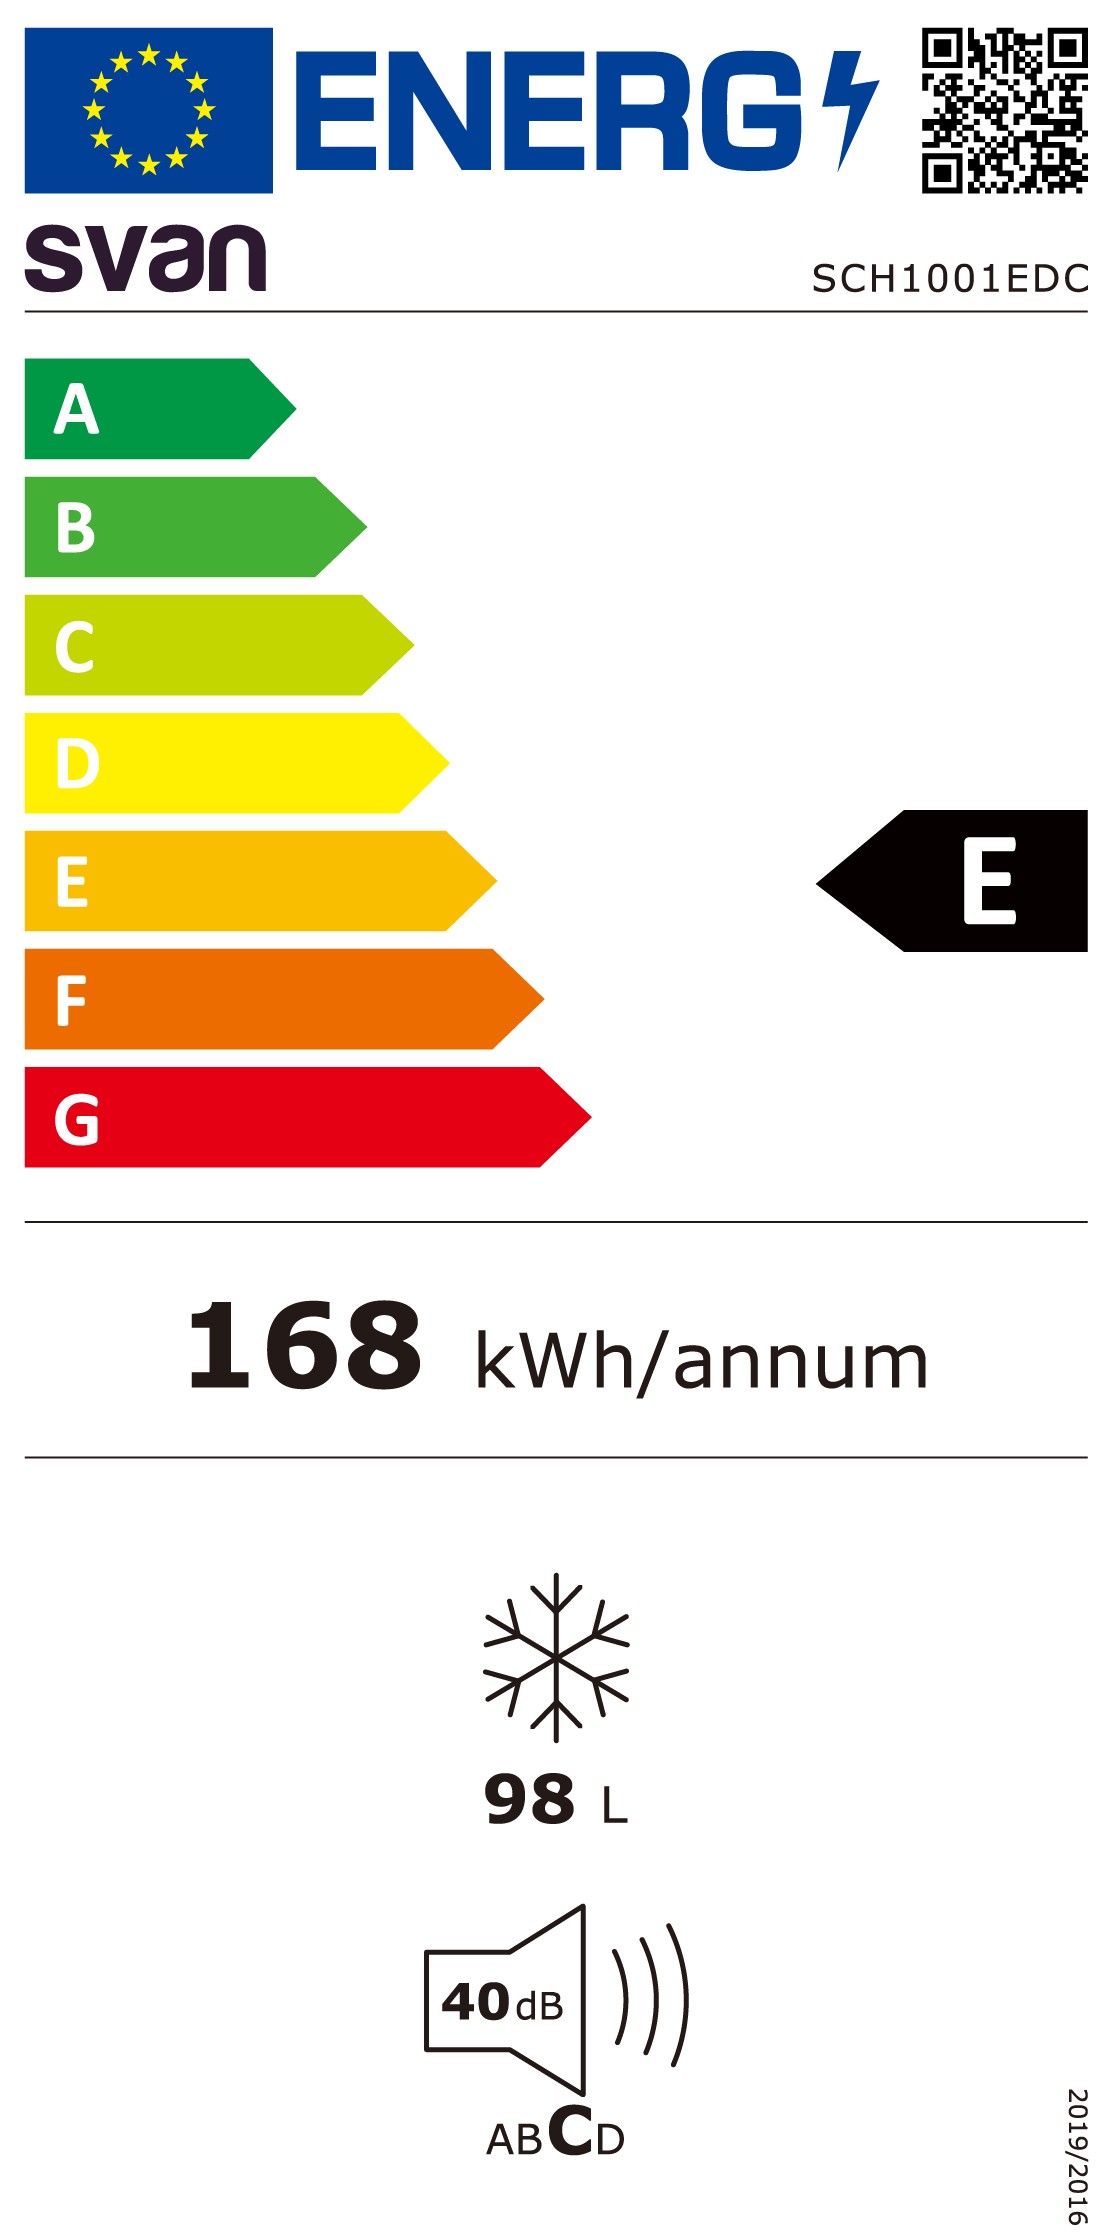 Etiqueta de Eficiencia Energética - SCH1001EDC